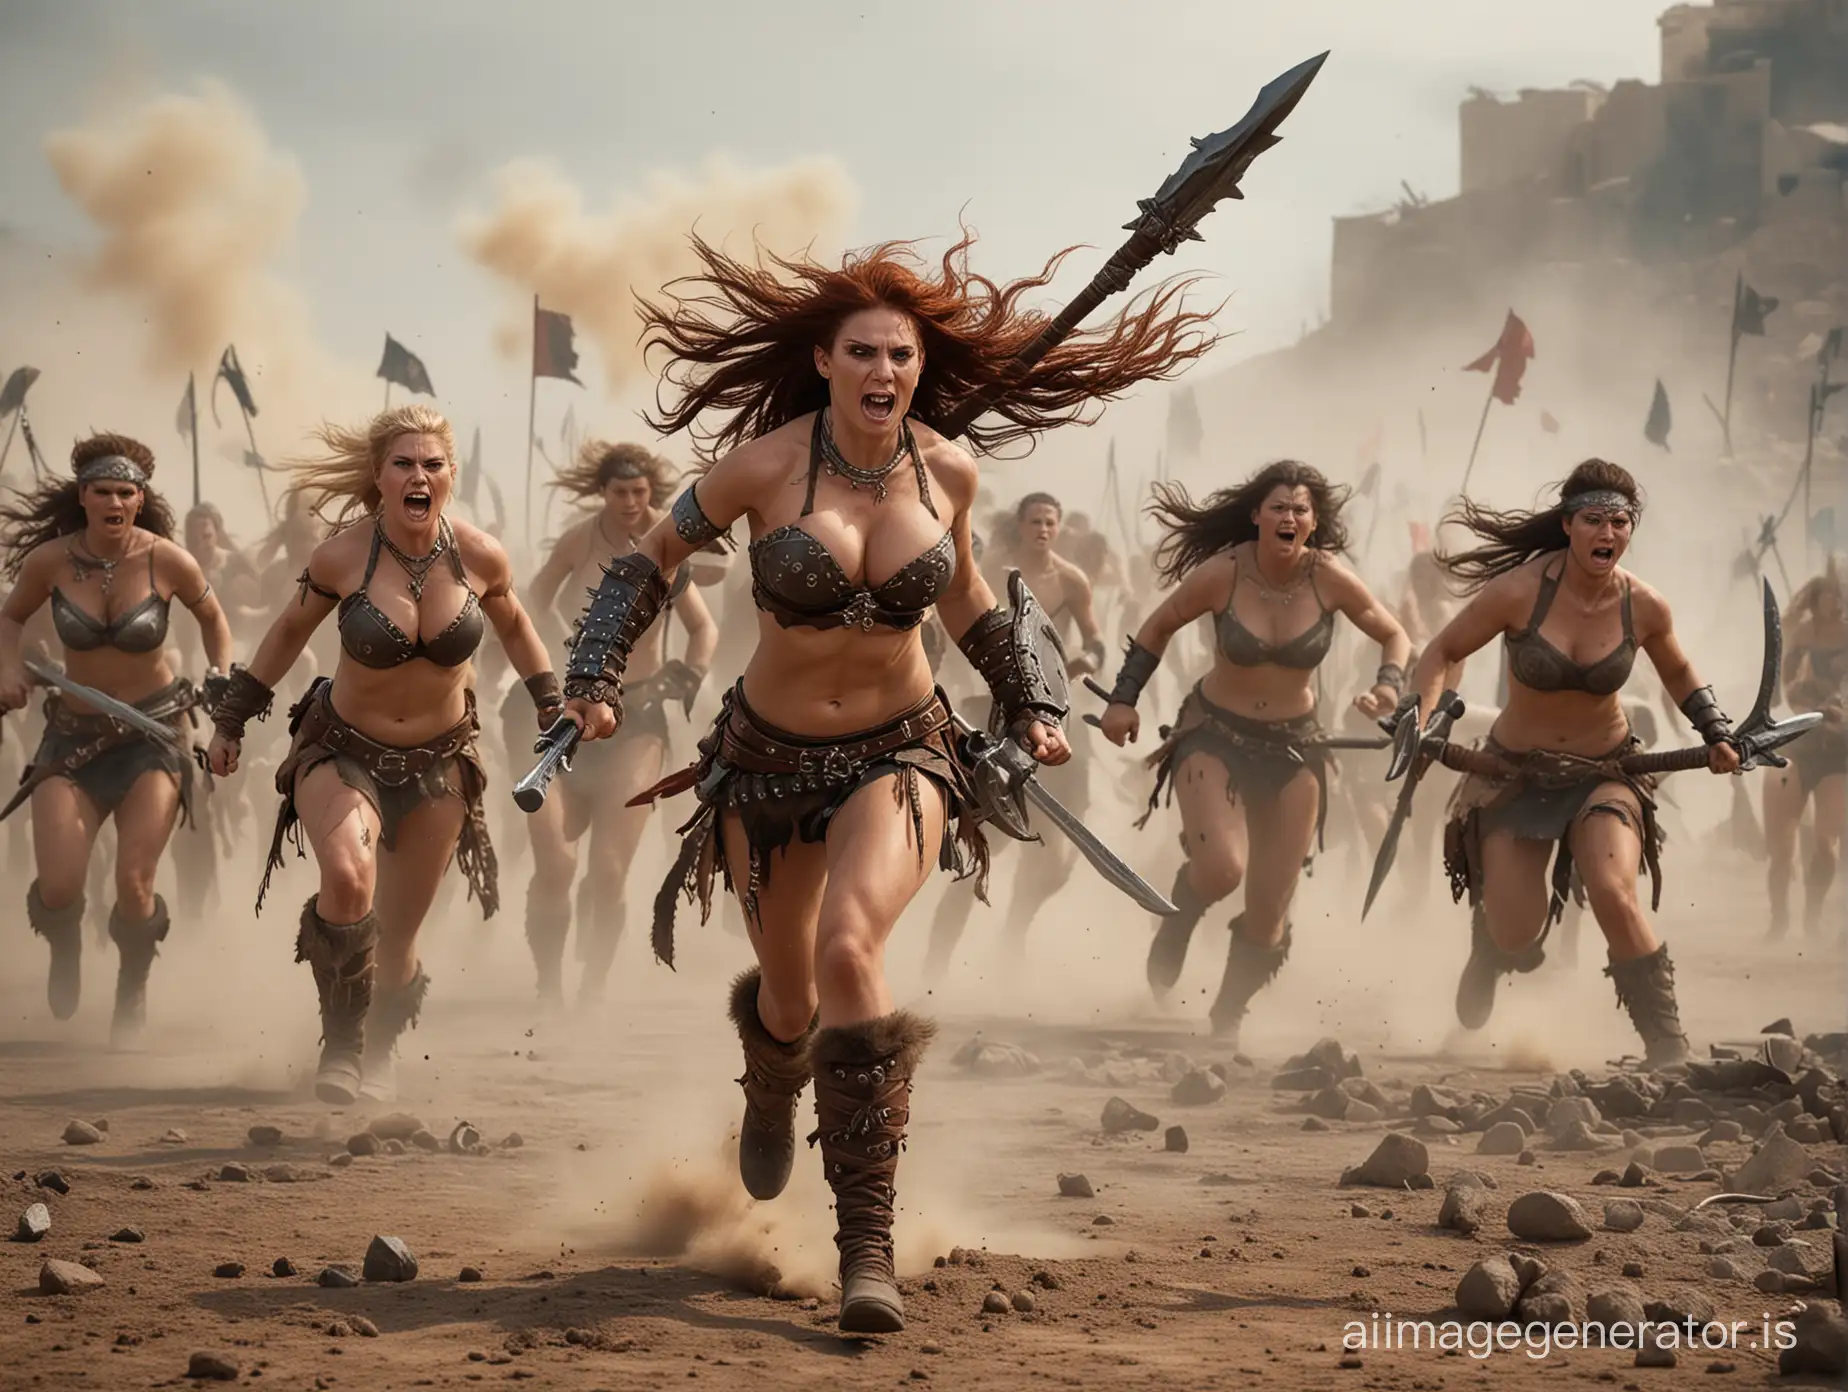 Rampaging-Horde-of-Female-Barbarians-Charging-Through-Battlefield-Chaos